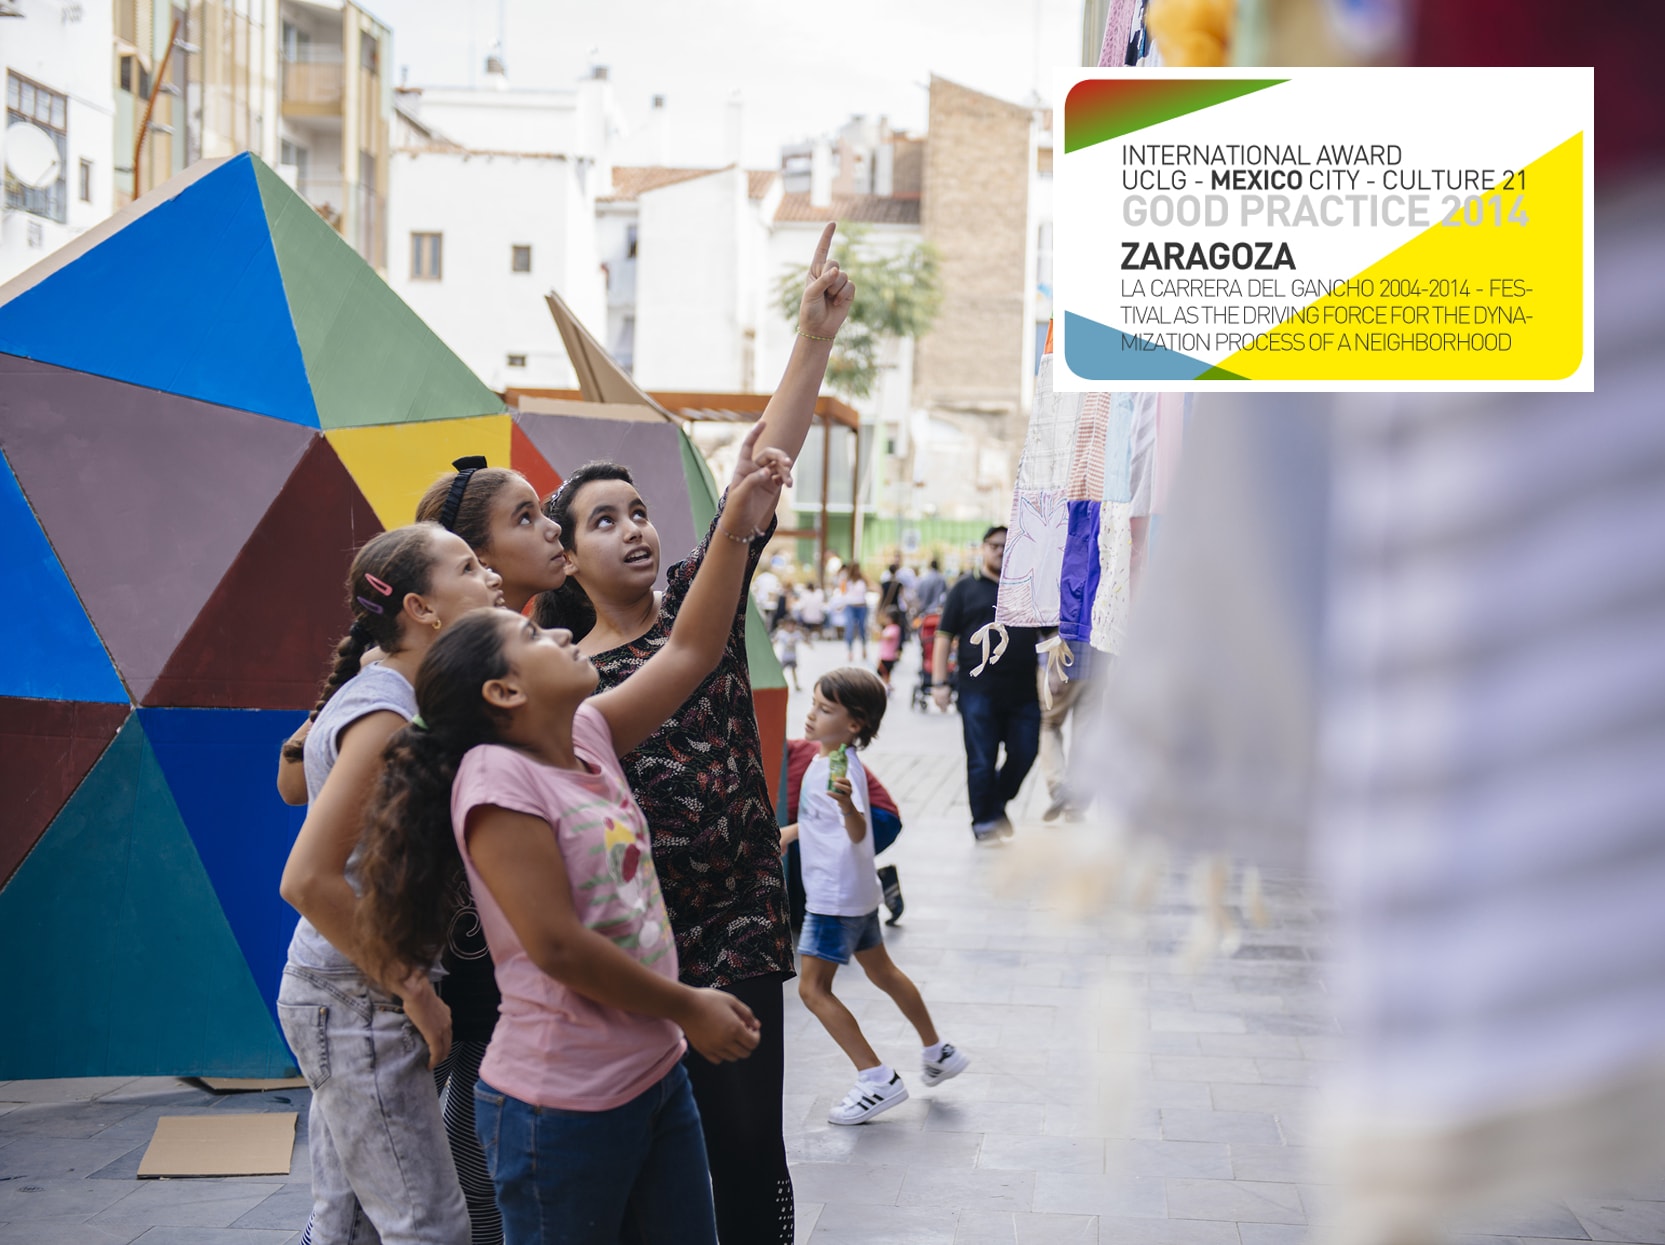 La Carrera del Gancho: the Festival, a driving force in the process of neighbourhood enhancement, Zaragoza